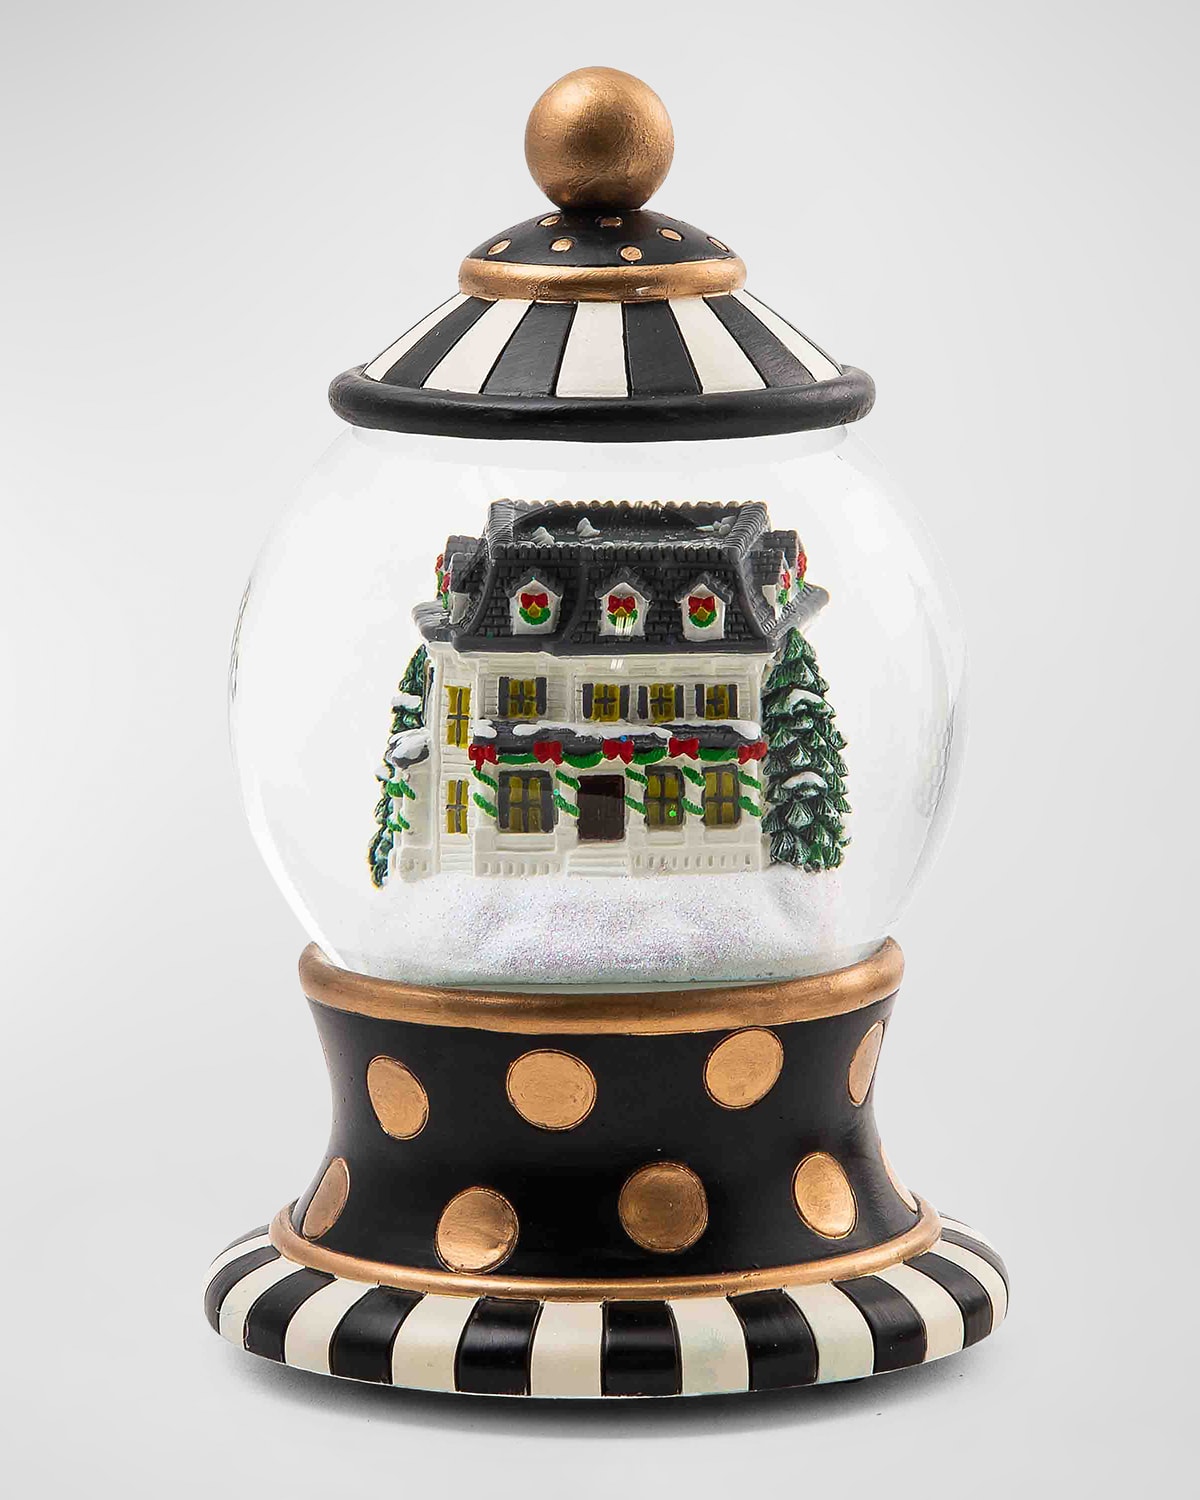 Mackenzie-childs Farmhouse Snow Globe Christmas Decoration